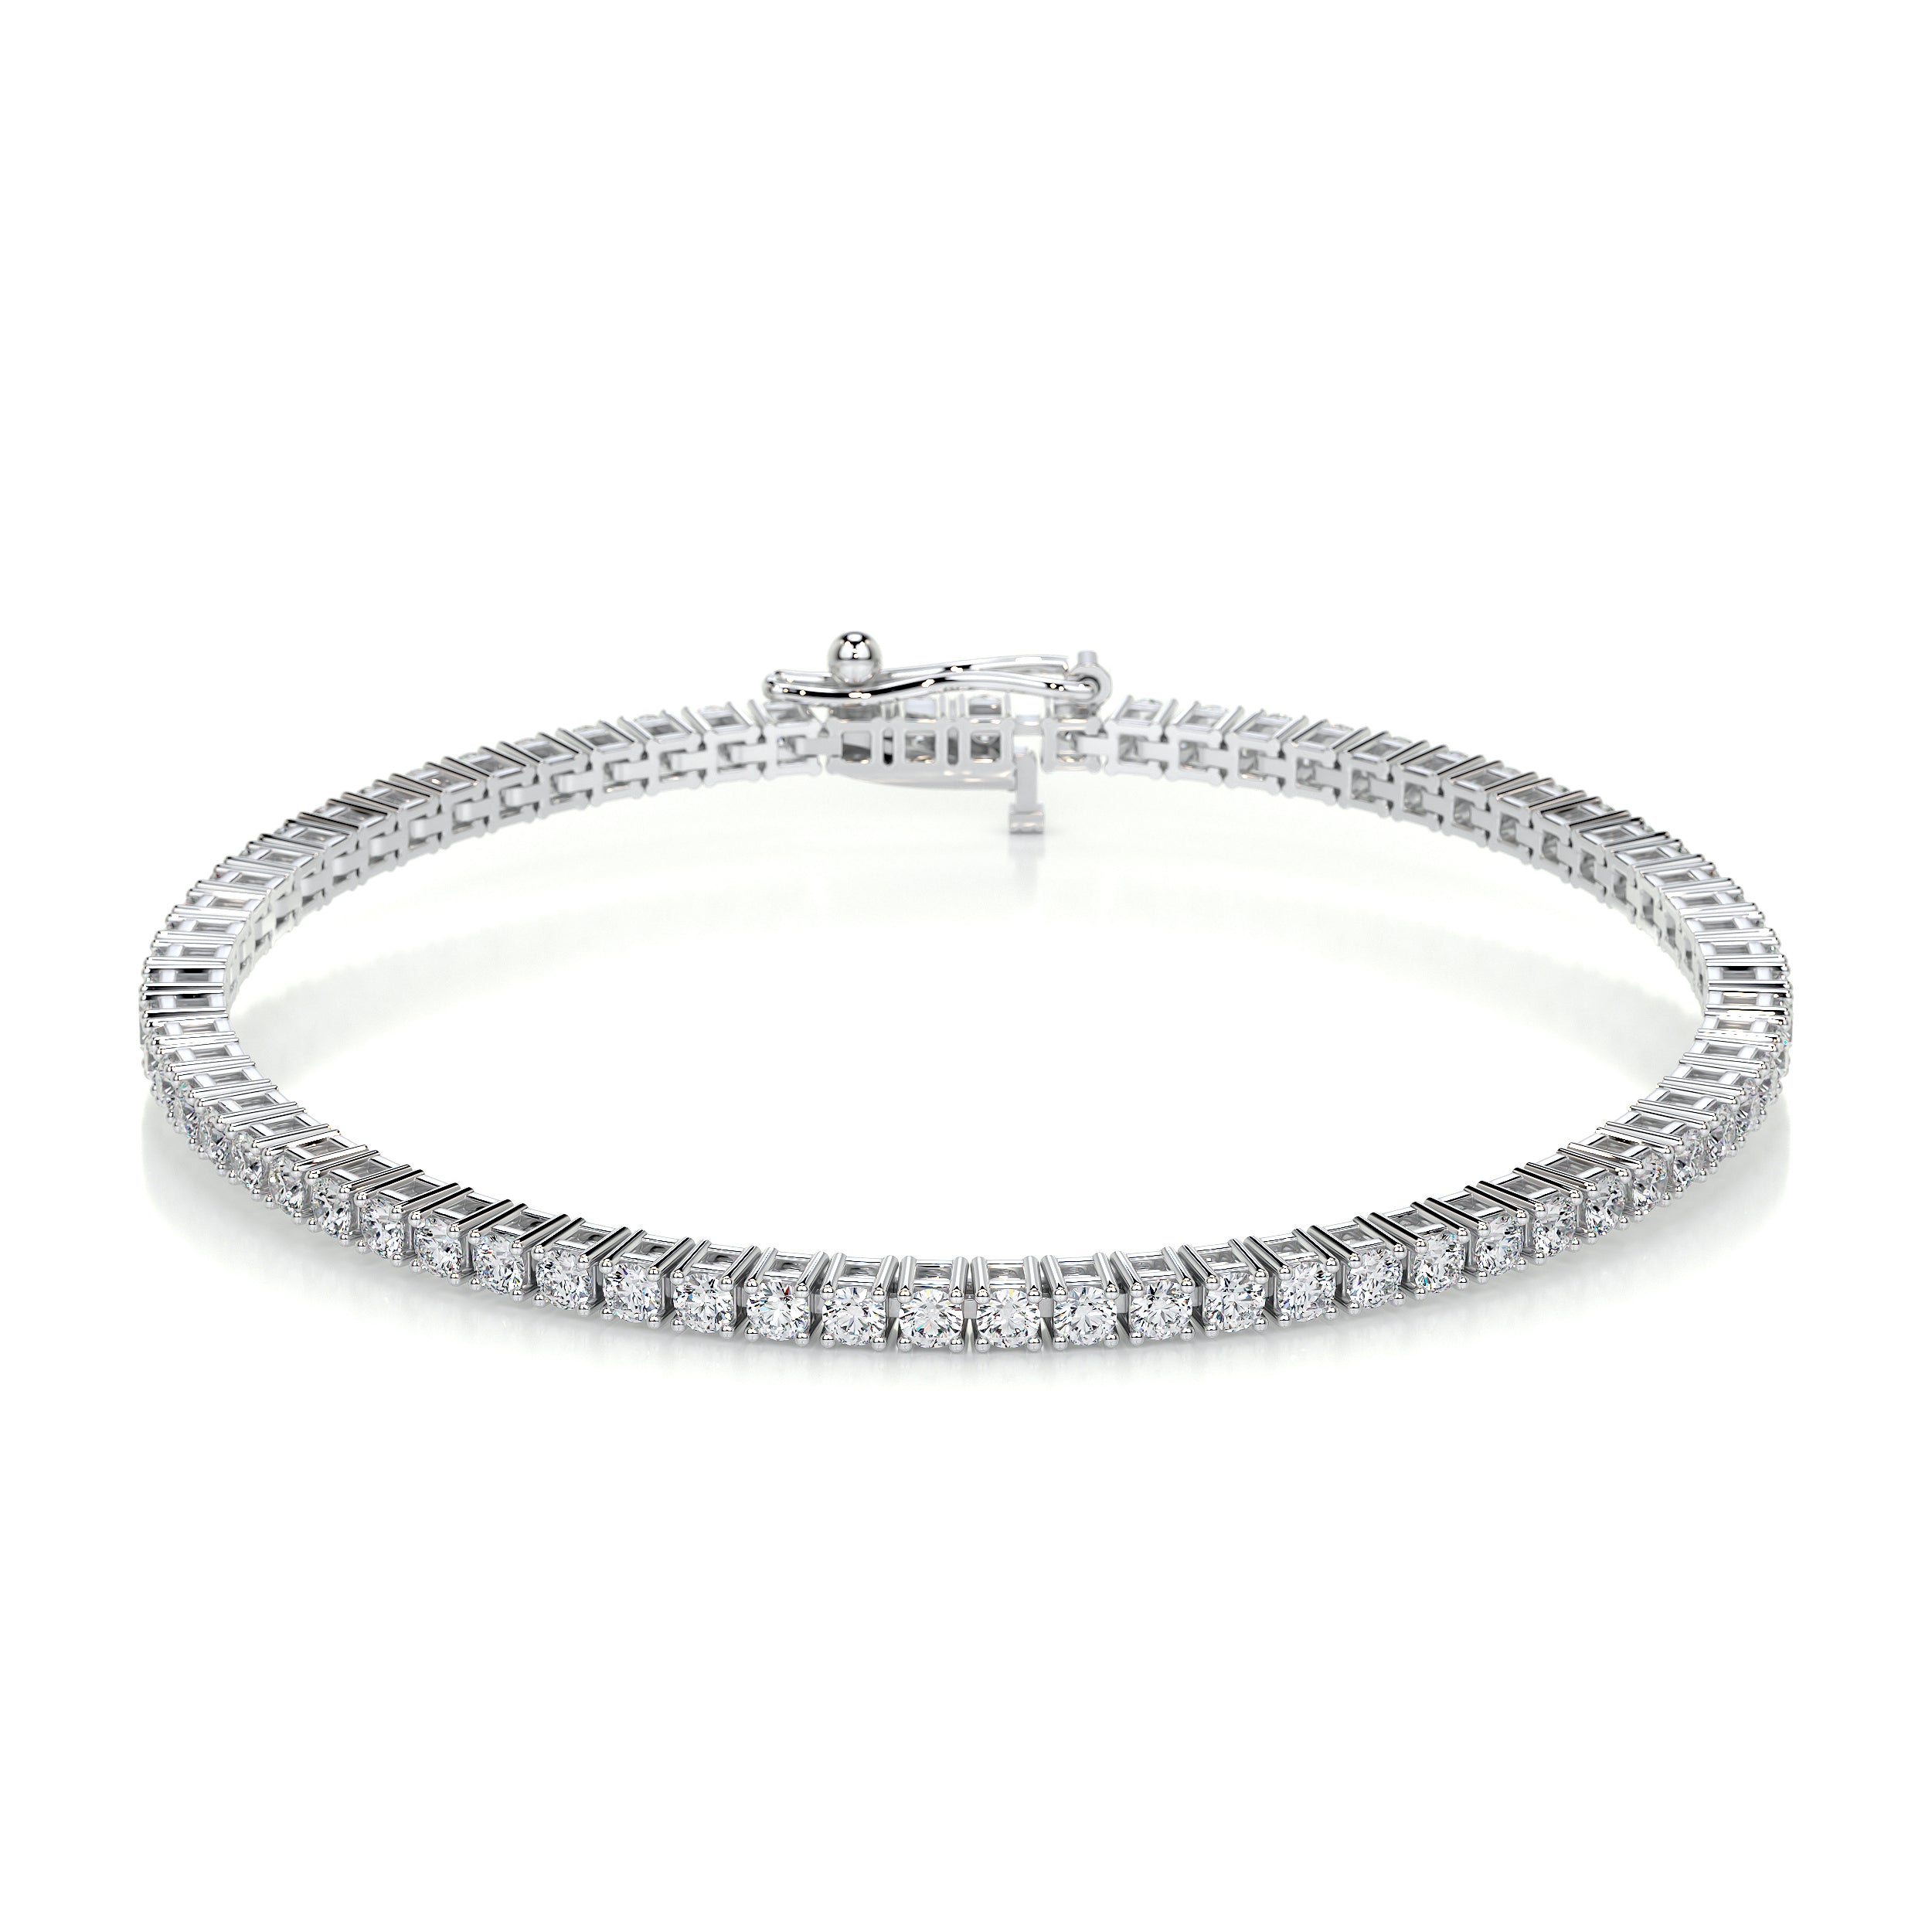 Sidney Tennis Diamonds Bracelet   (2.5 Carat) -18K White Gold